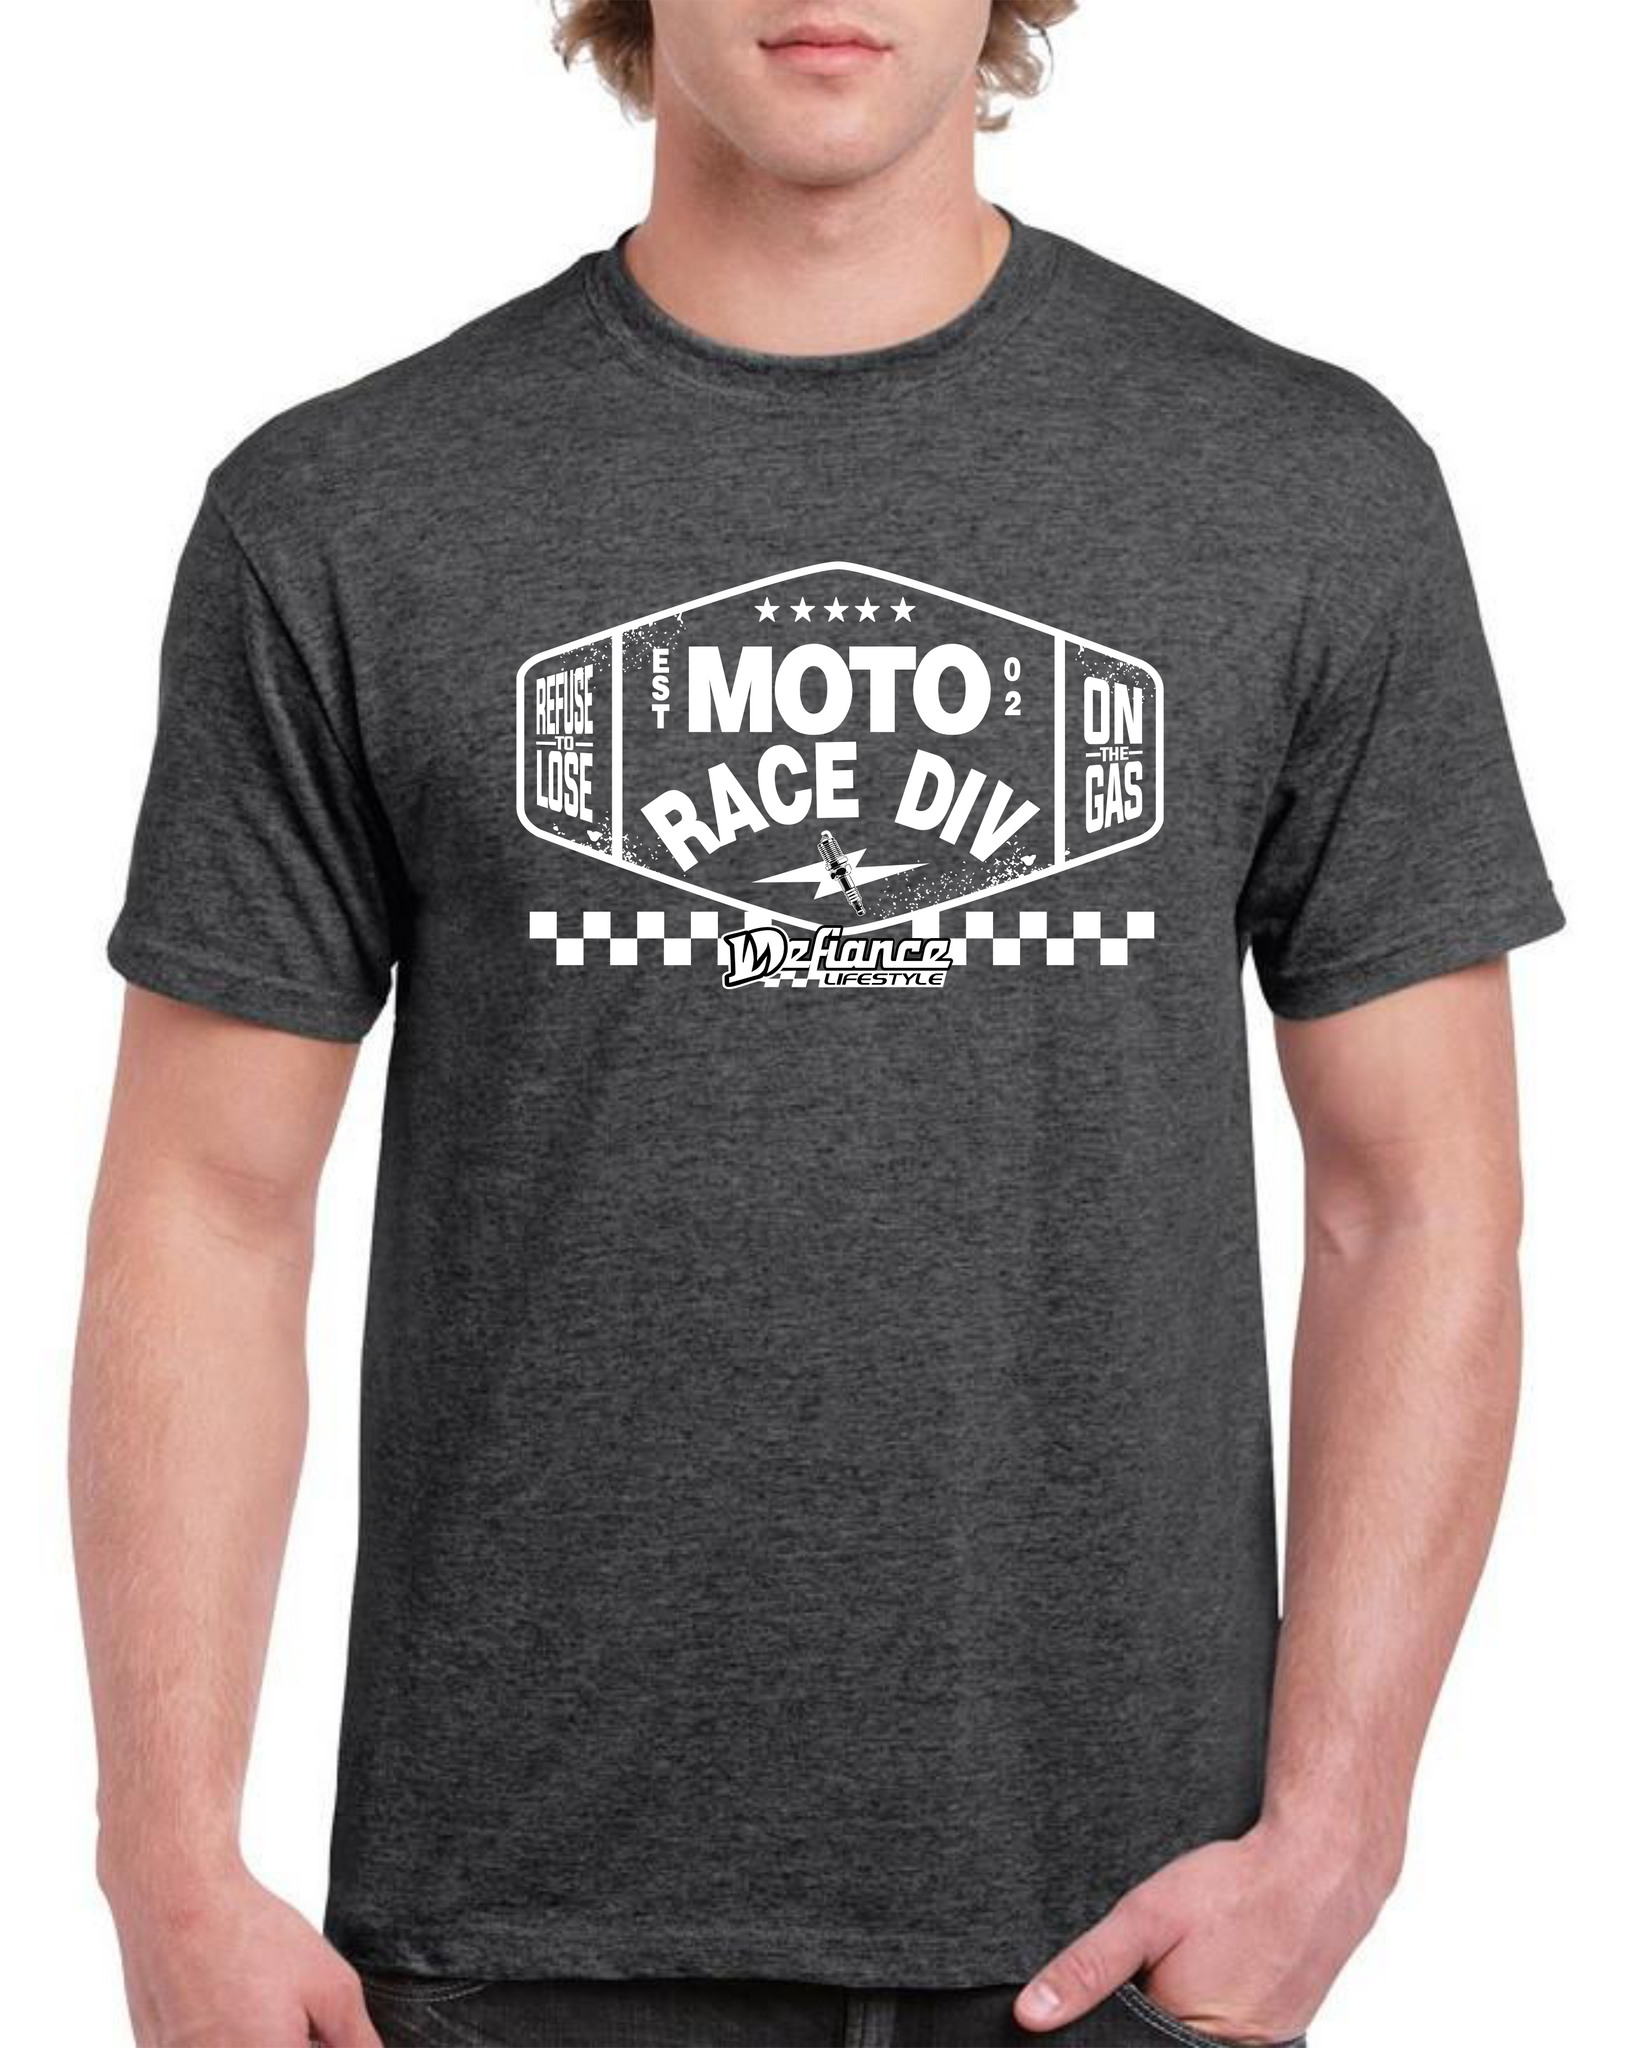 Race T-Shirt - On The GAS - defiance race div